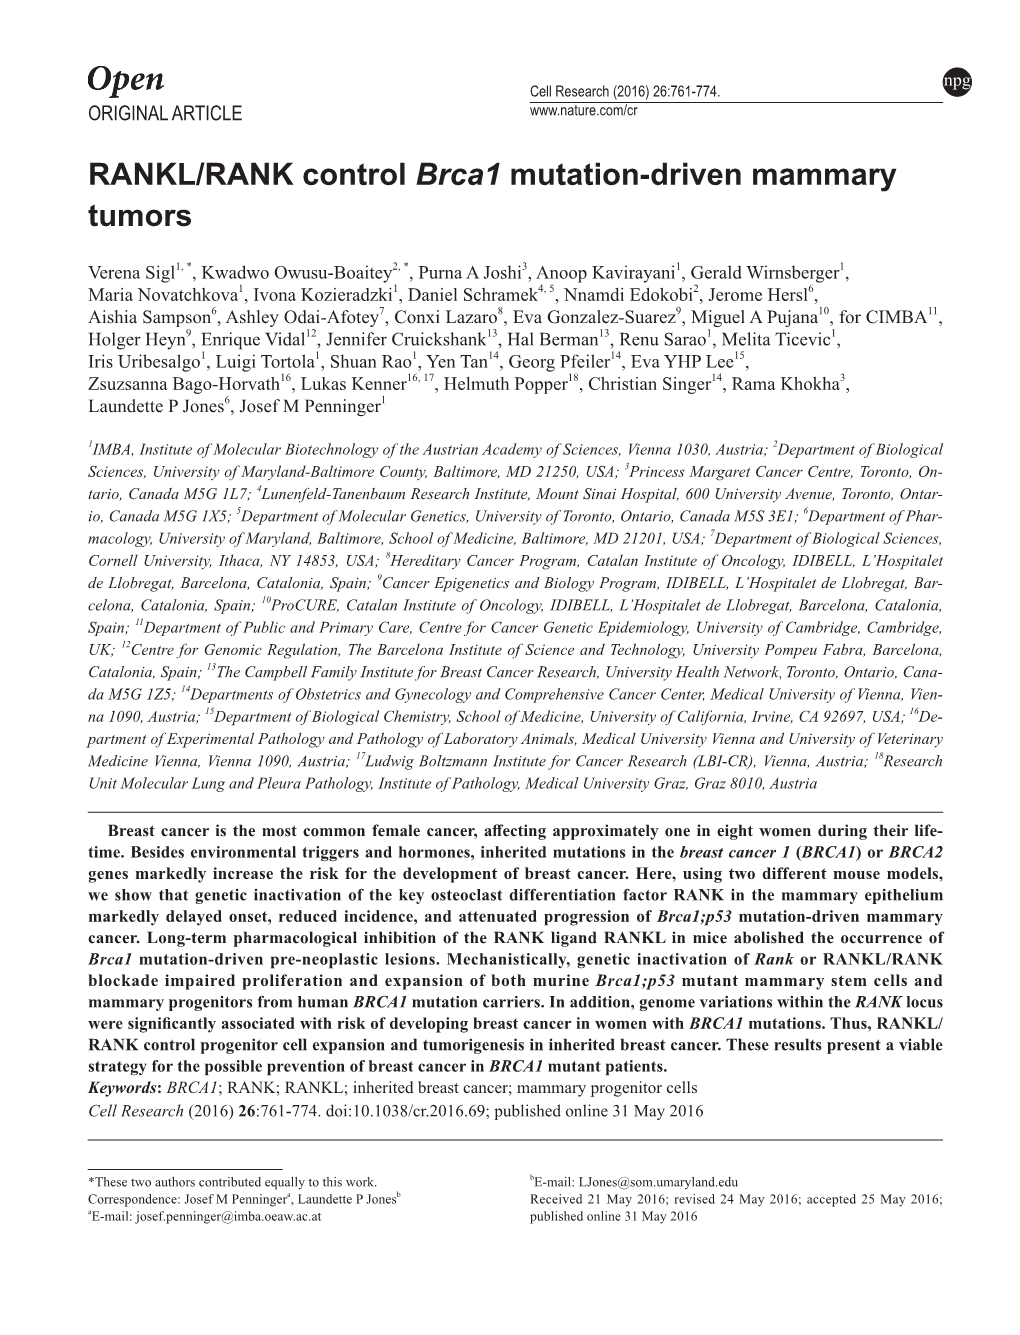 RANKL/RANK Control Brca1 Mutation-Driven Mammary Tumors